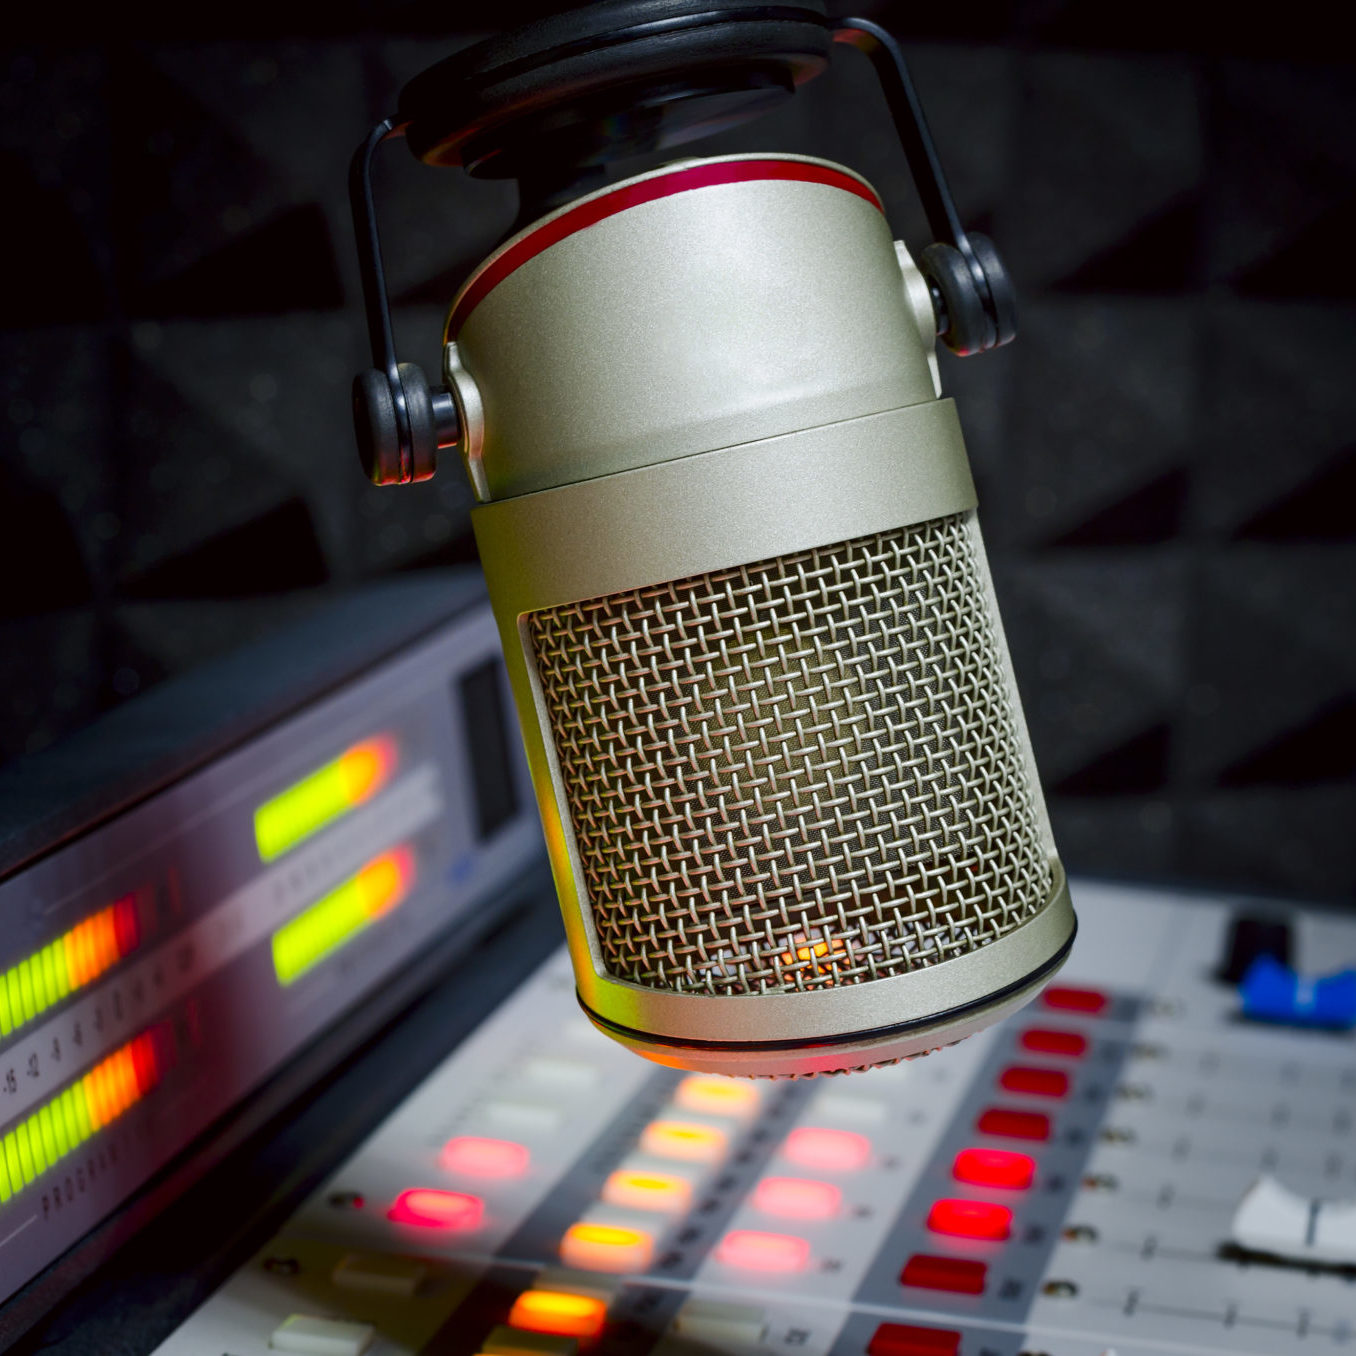 microphone and audio console in the dark radio studio